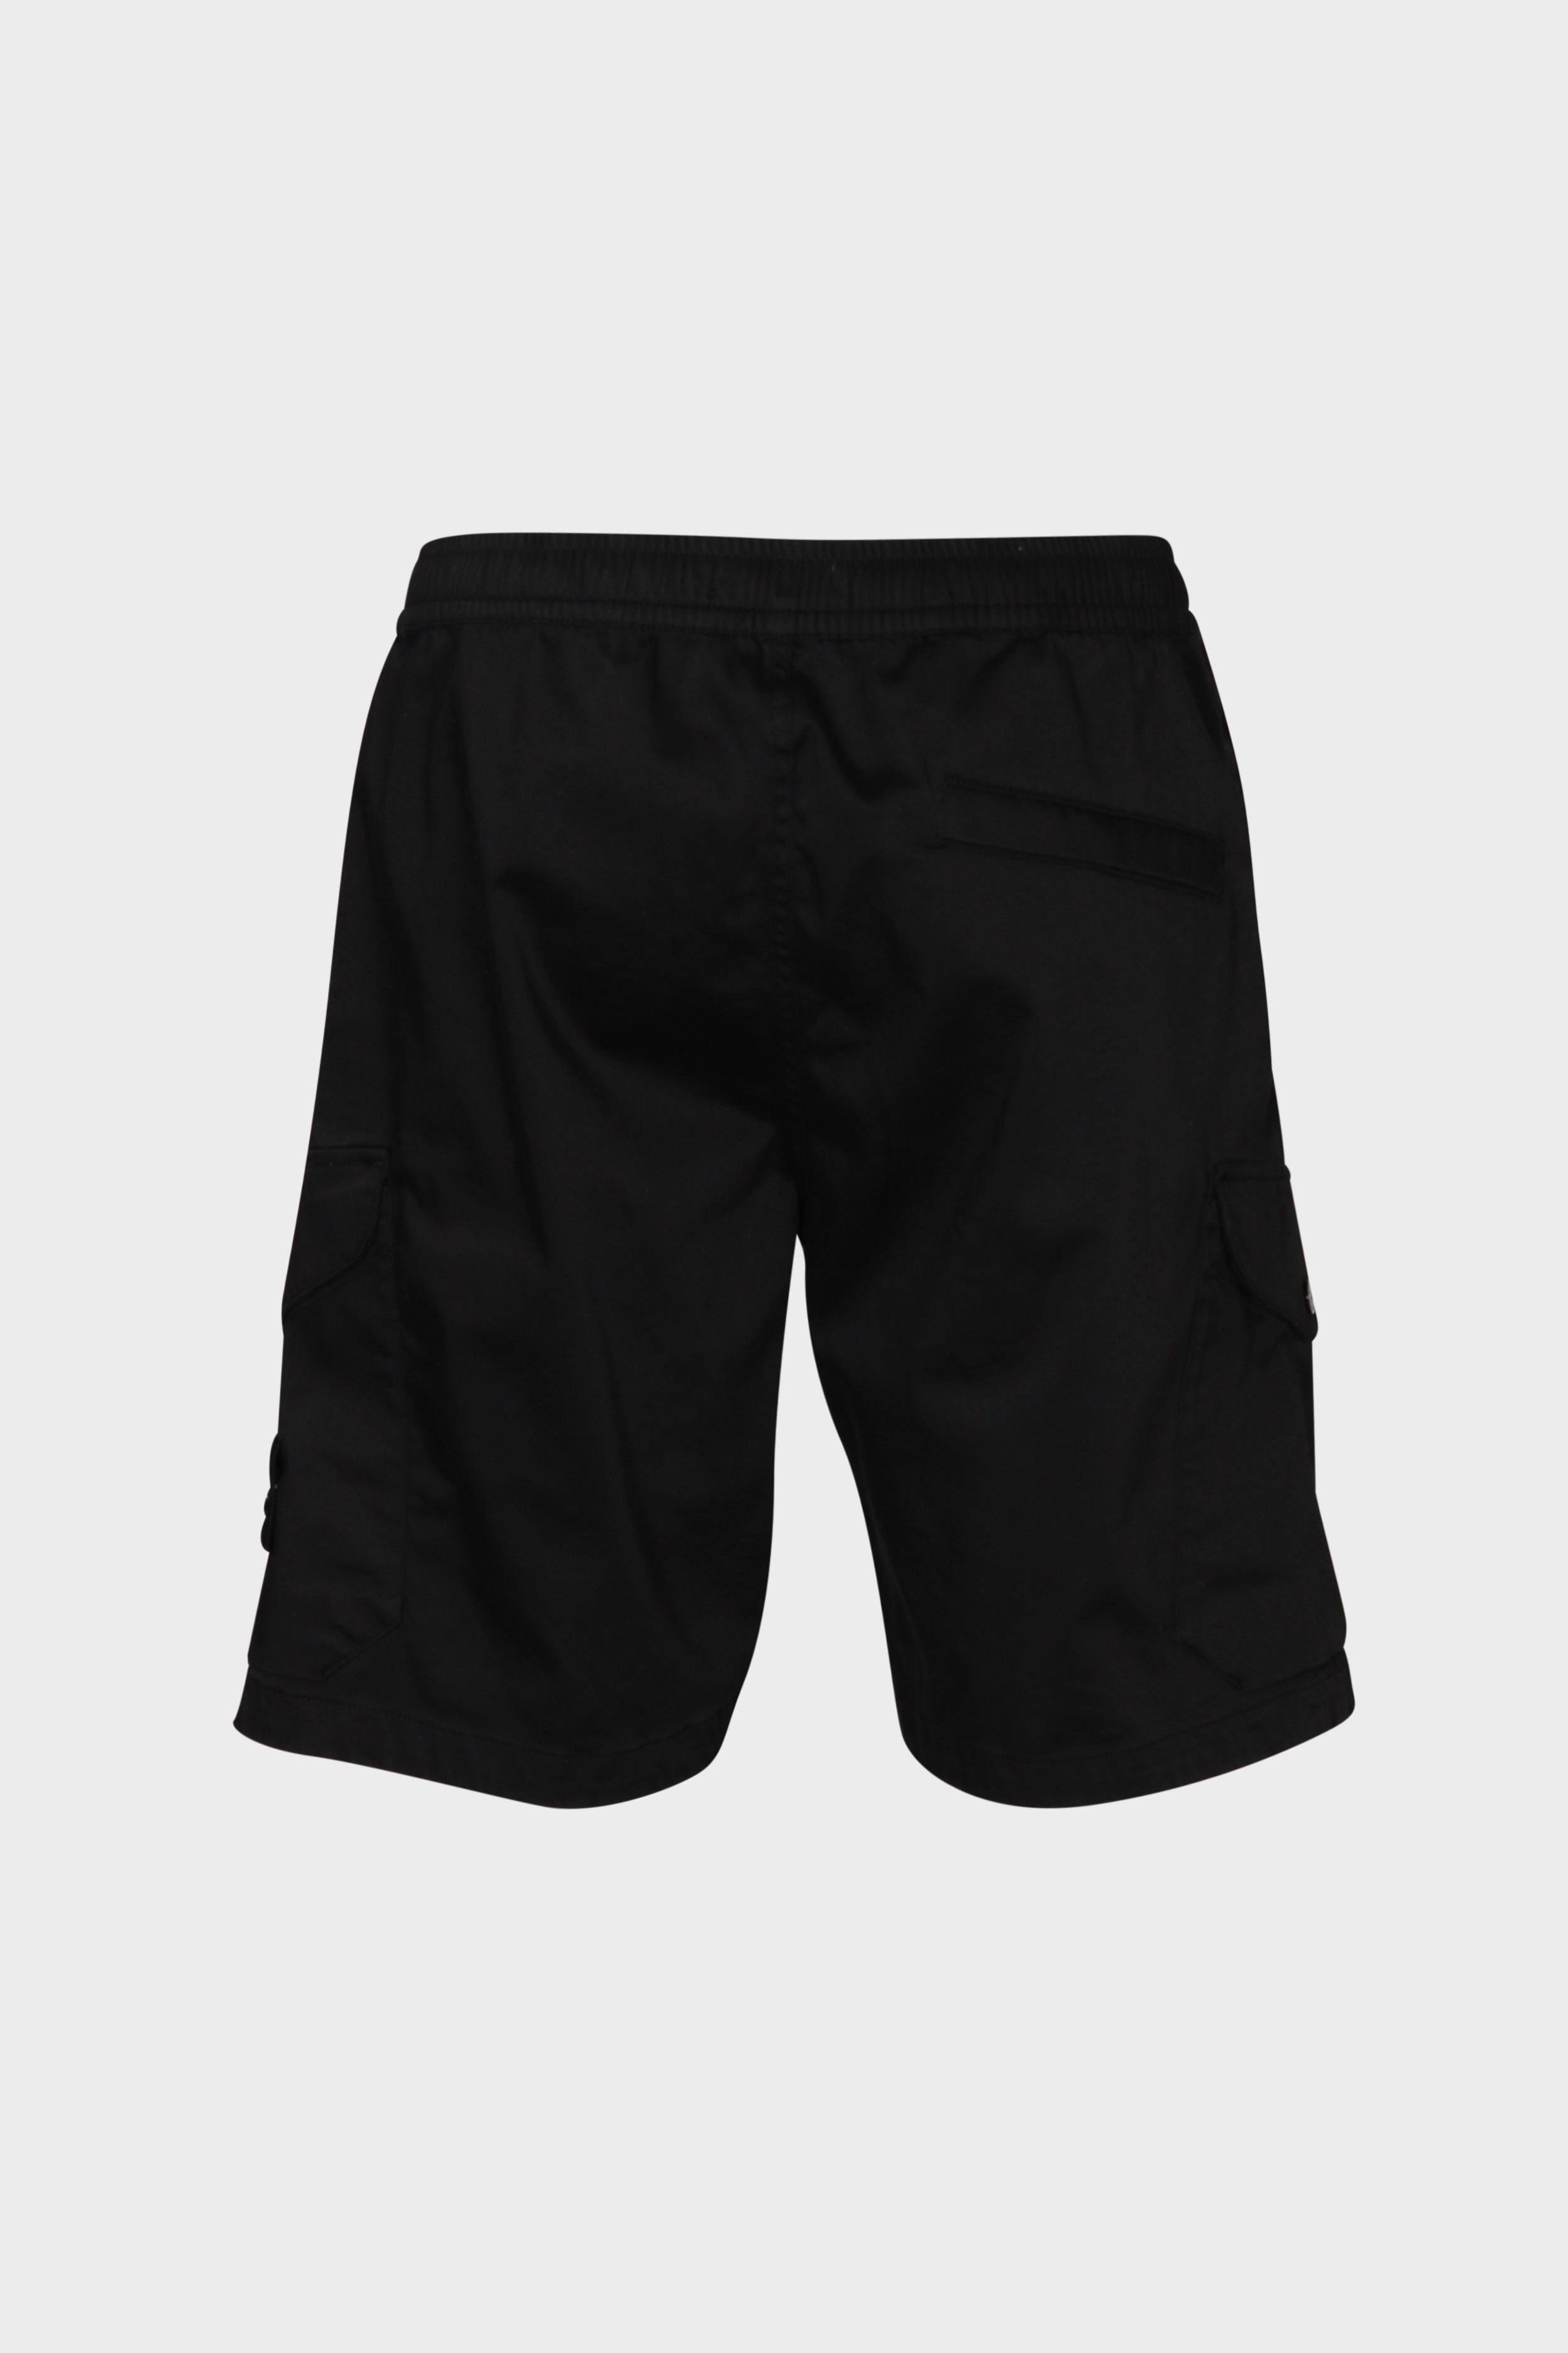 STONE ISLAND Bermuda Shorts in Black 30